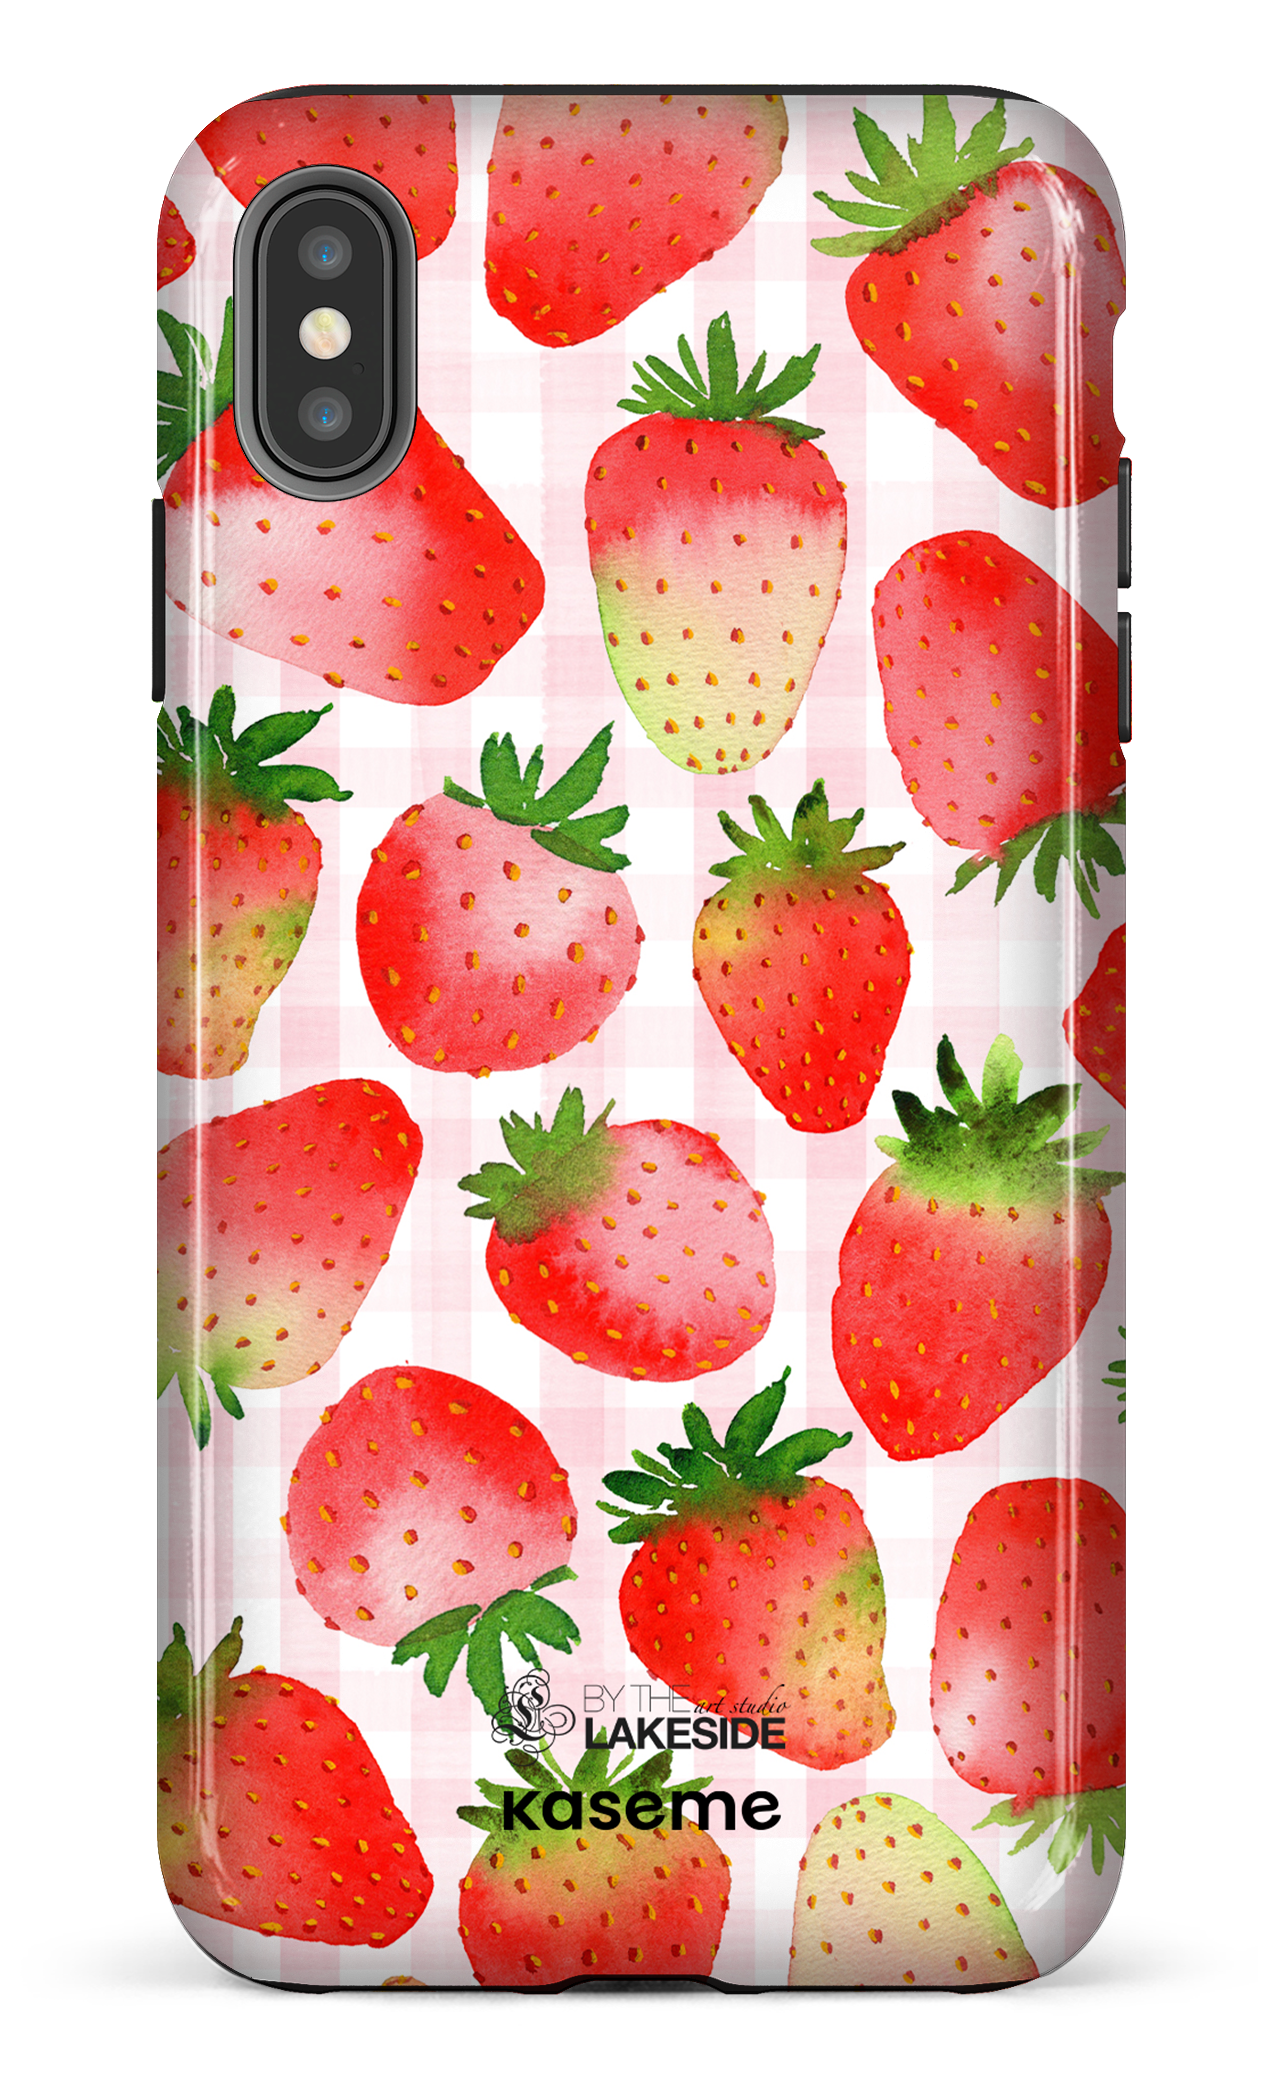 Strawberry Fields by Pooja Umrani - iPhone XS Max